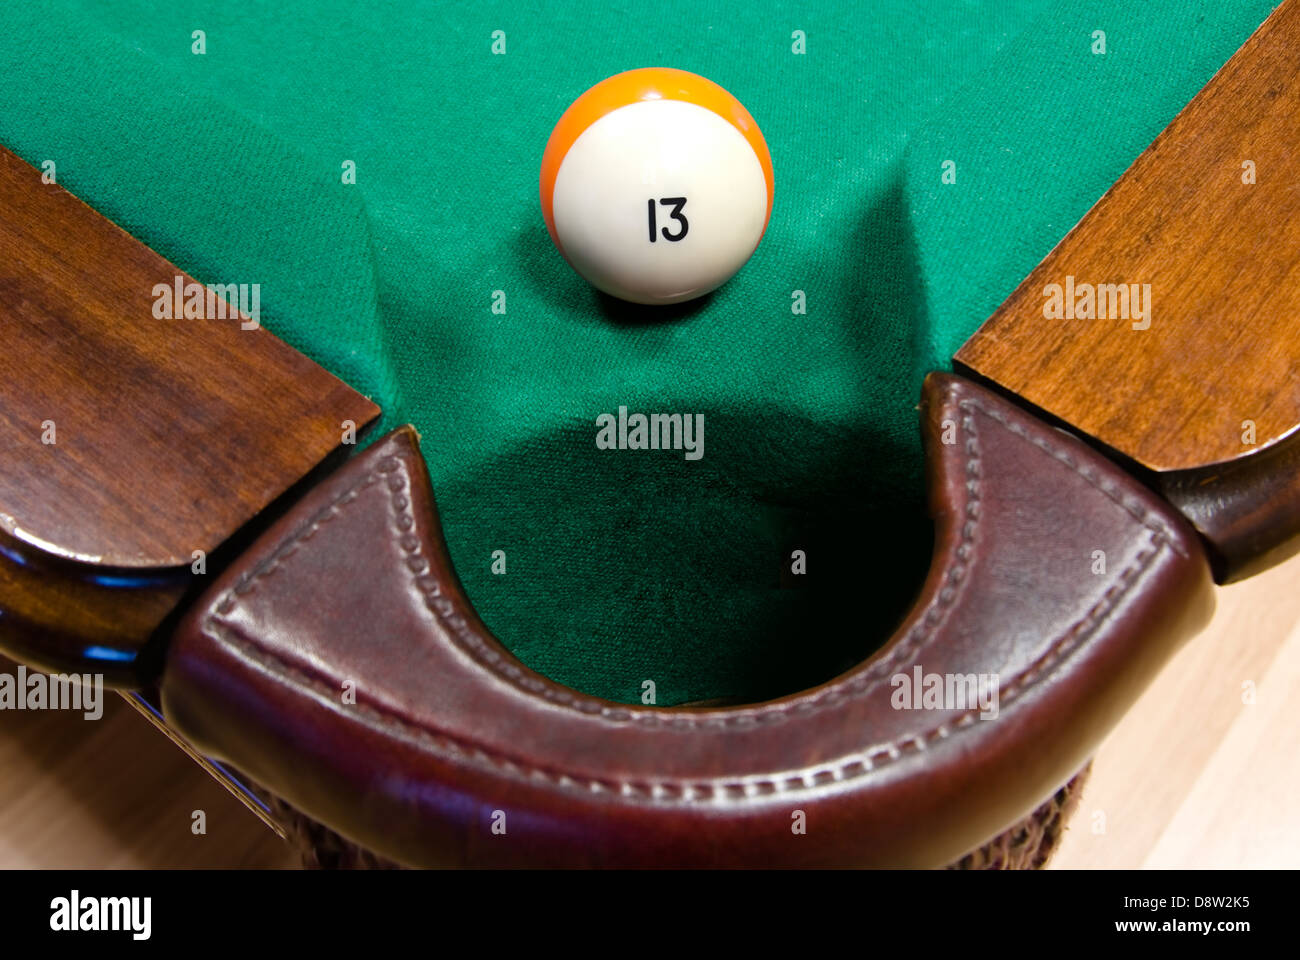 billiard ball N thirteen Stock Photo